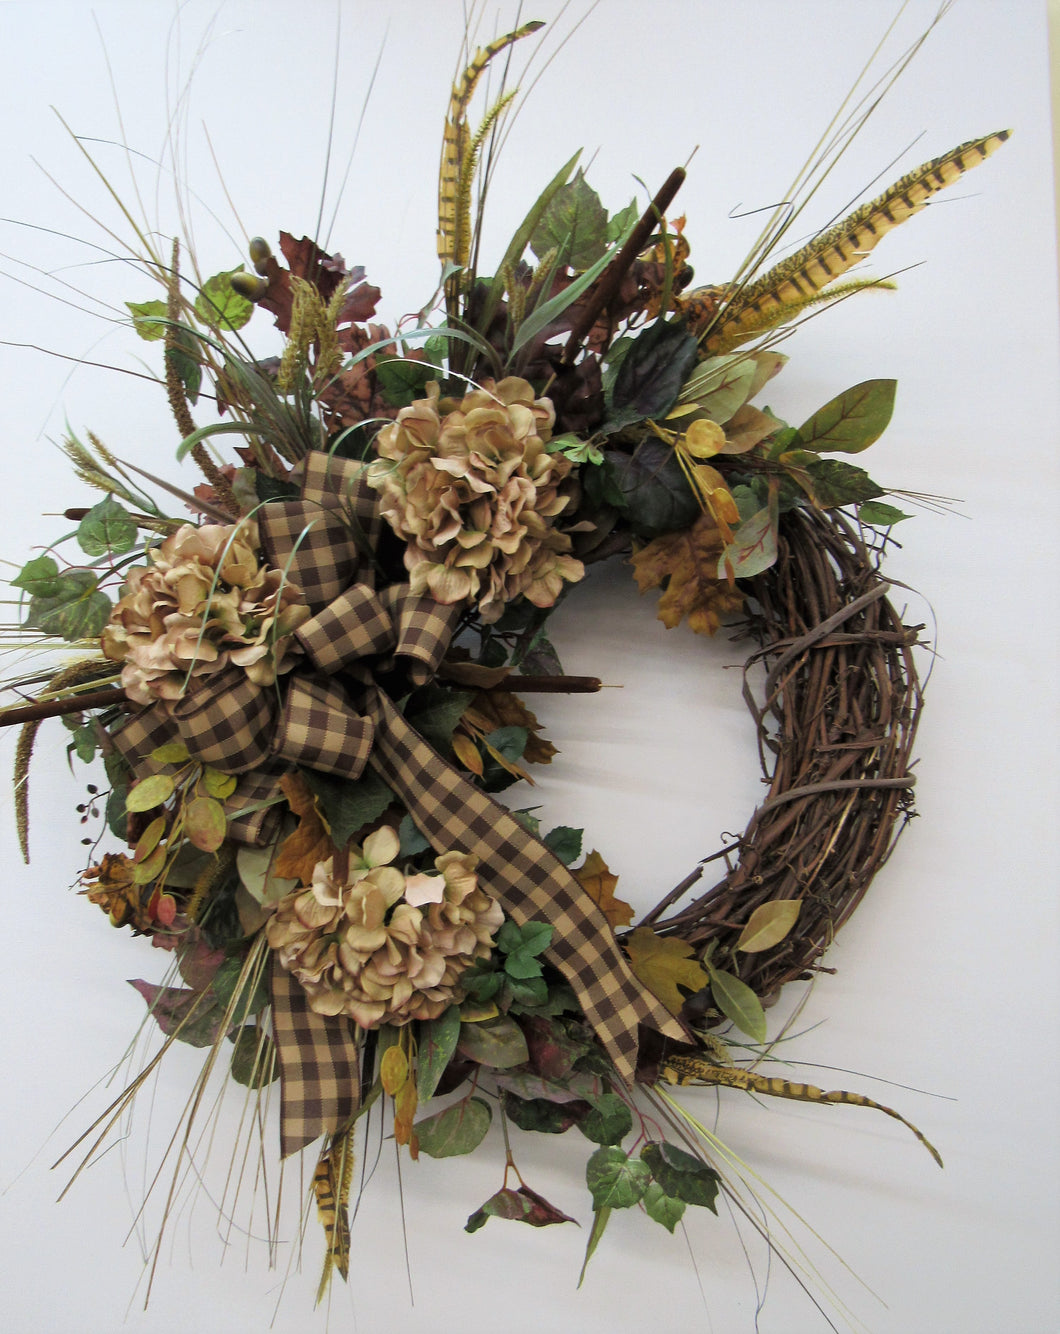 Gallery/Harv25 - April's Garden Wreath